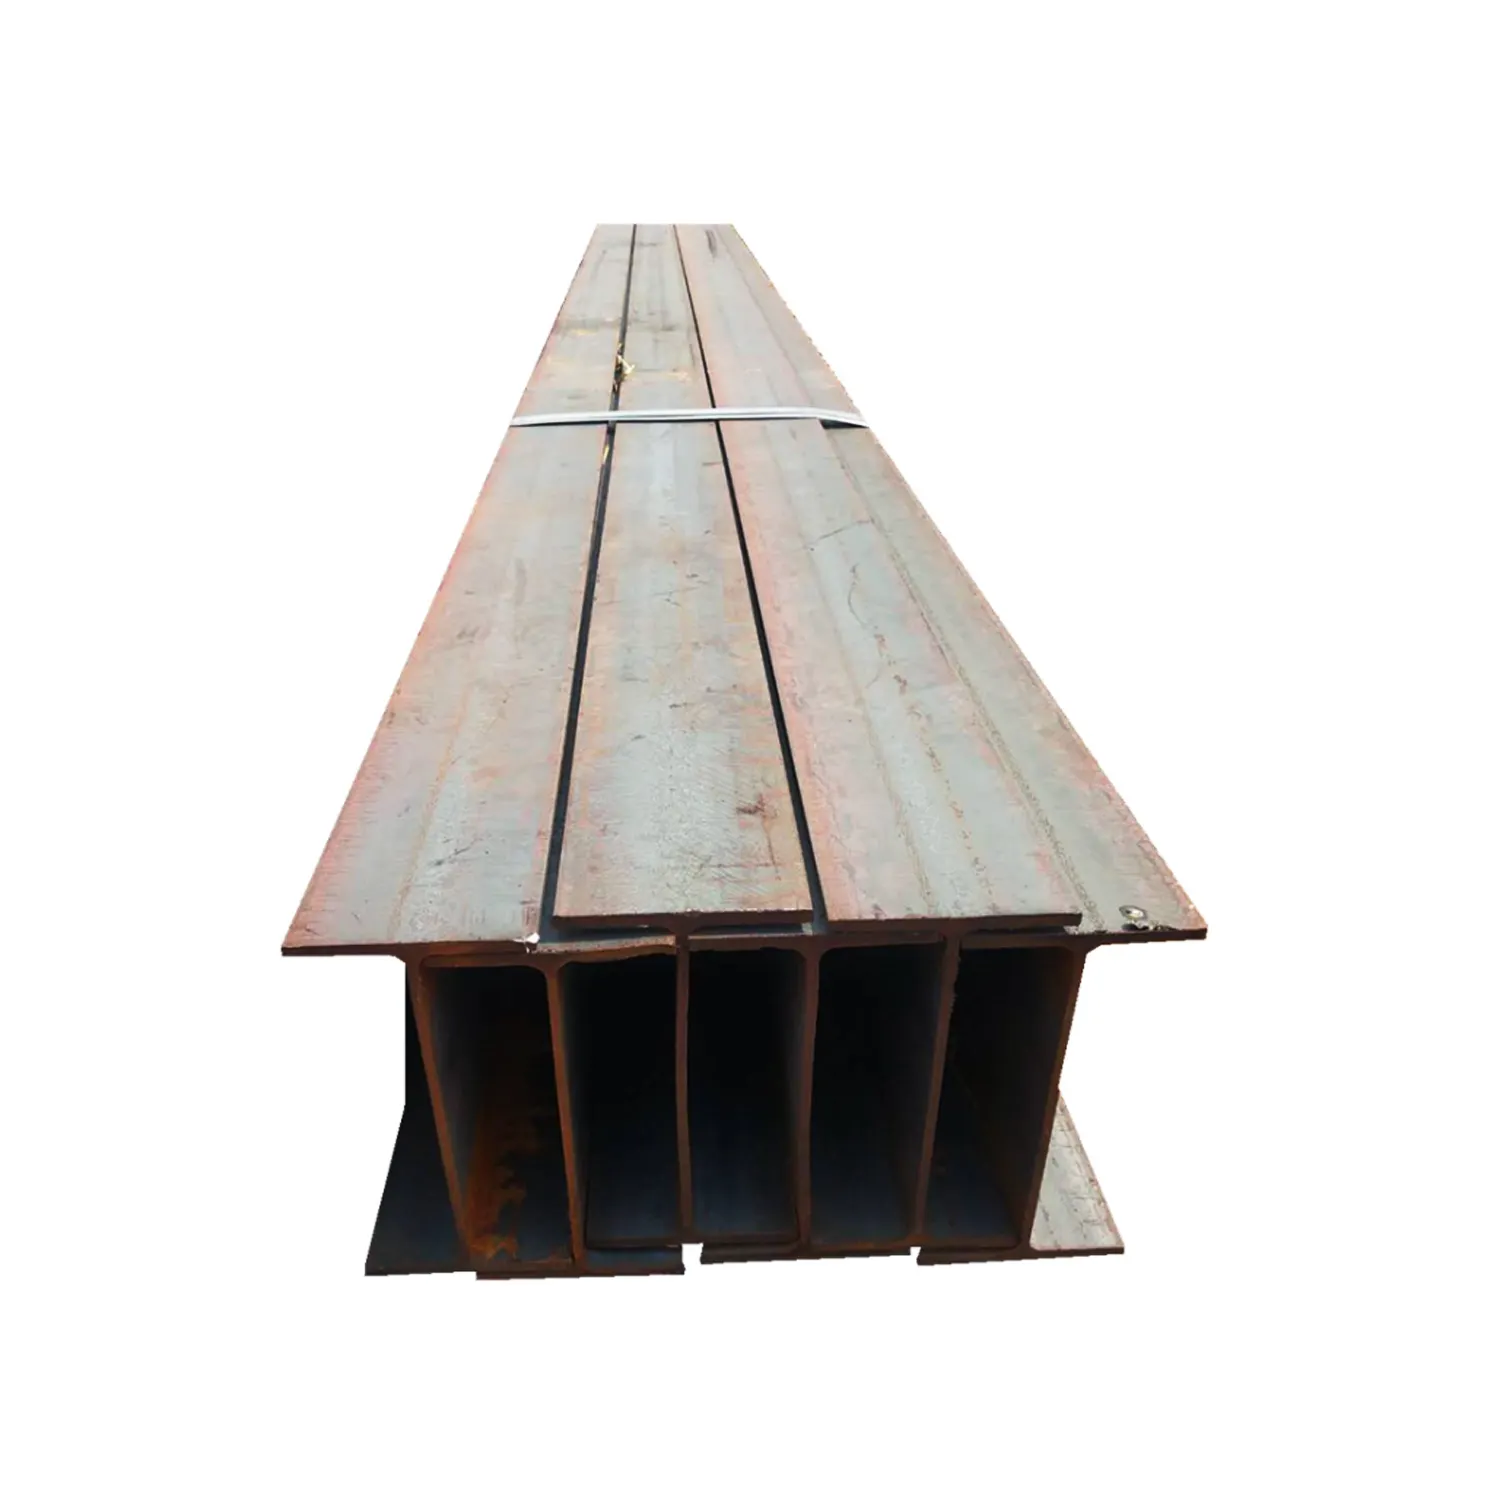 Spot building load-bearing structural steel beam H-shaped steel W4x4 American standard H-shaped steel column